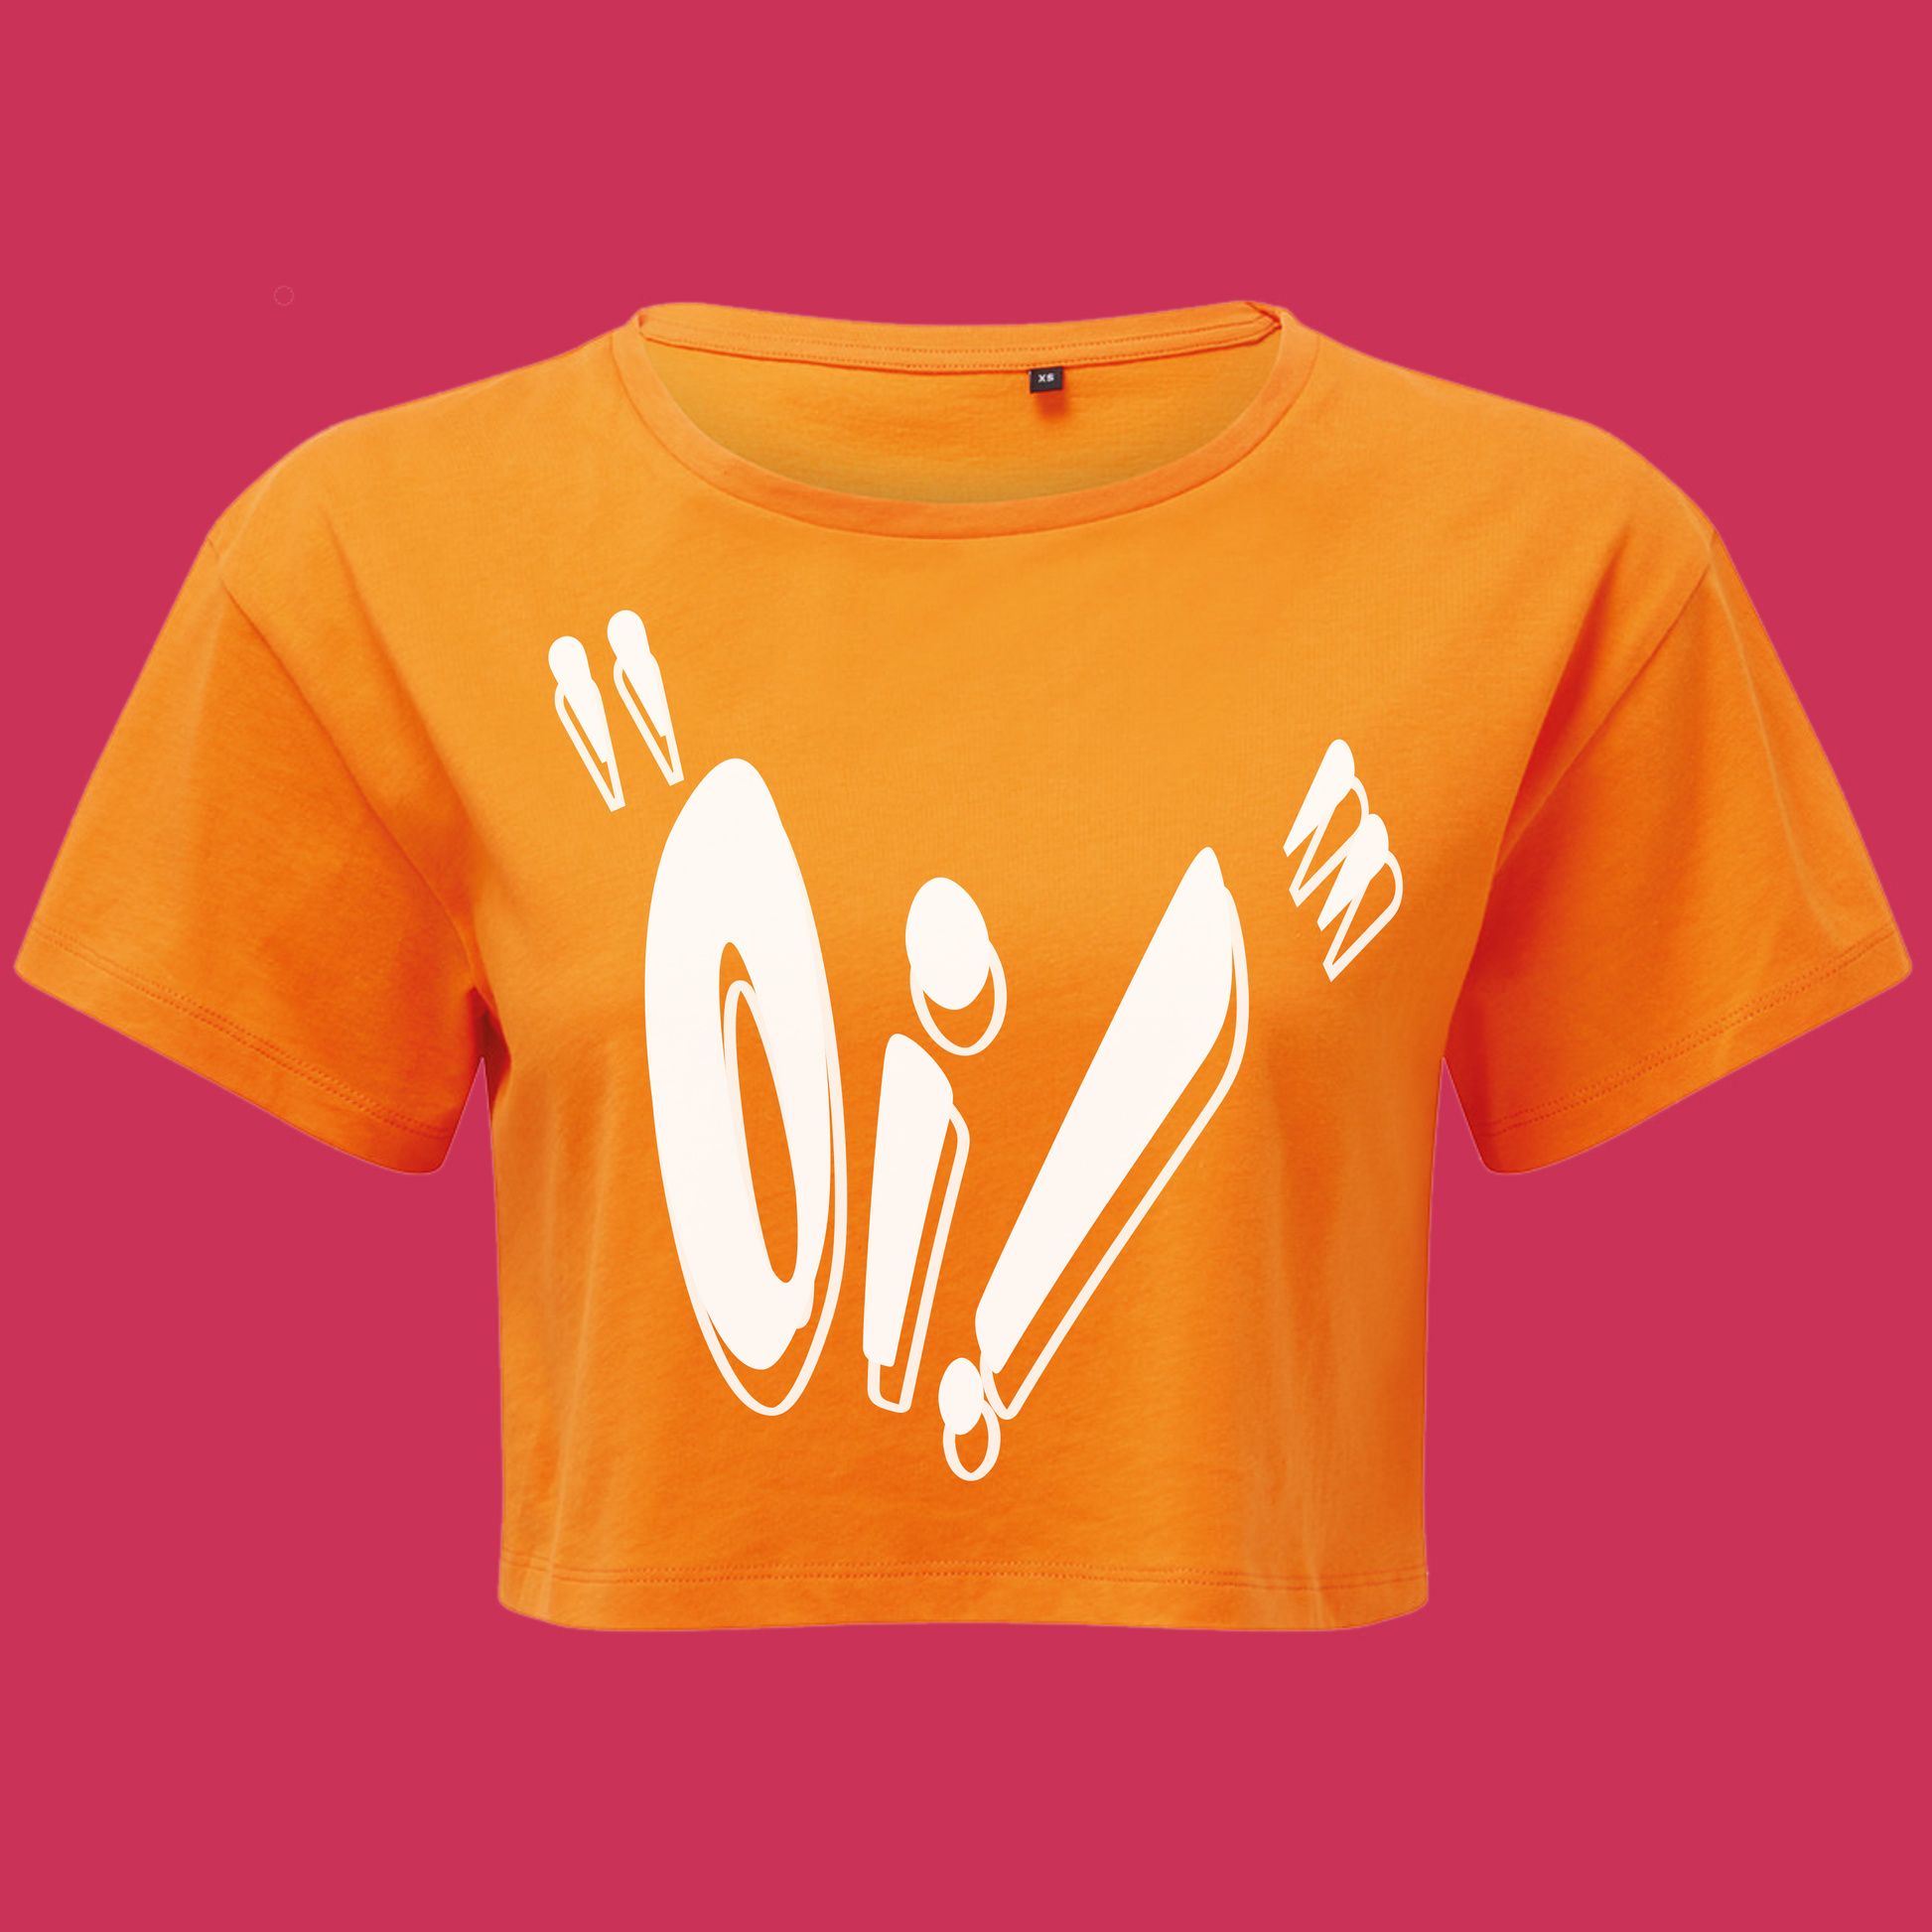 "Oi!" Cropped T-shirt orange